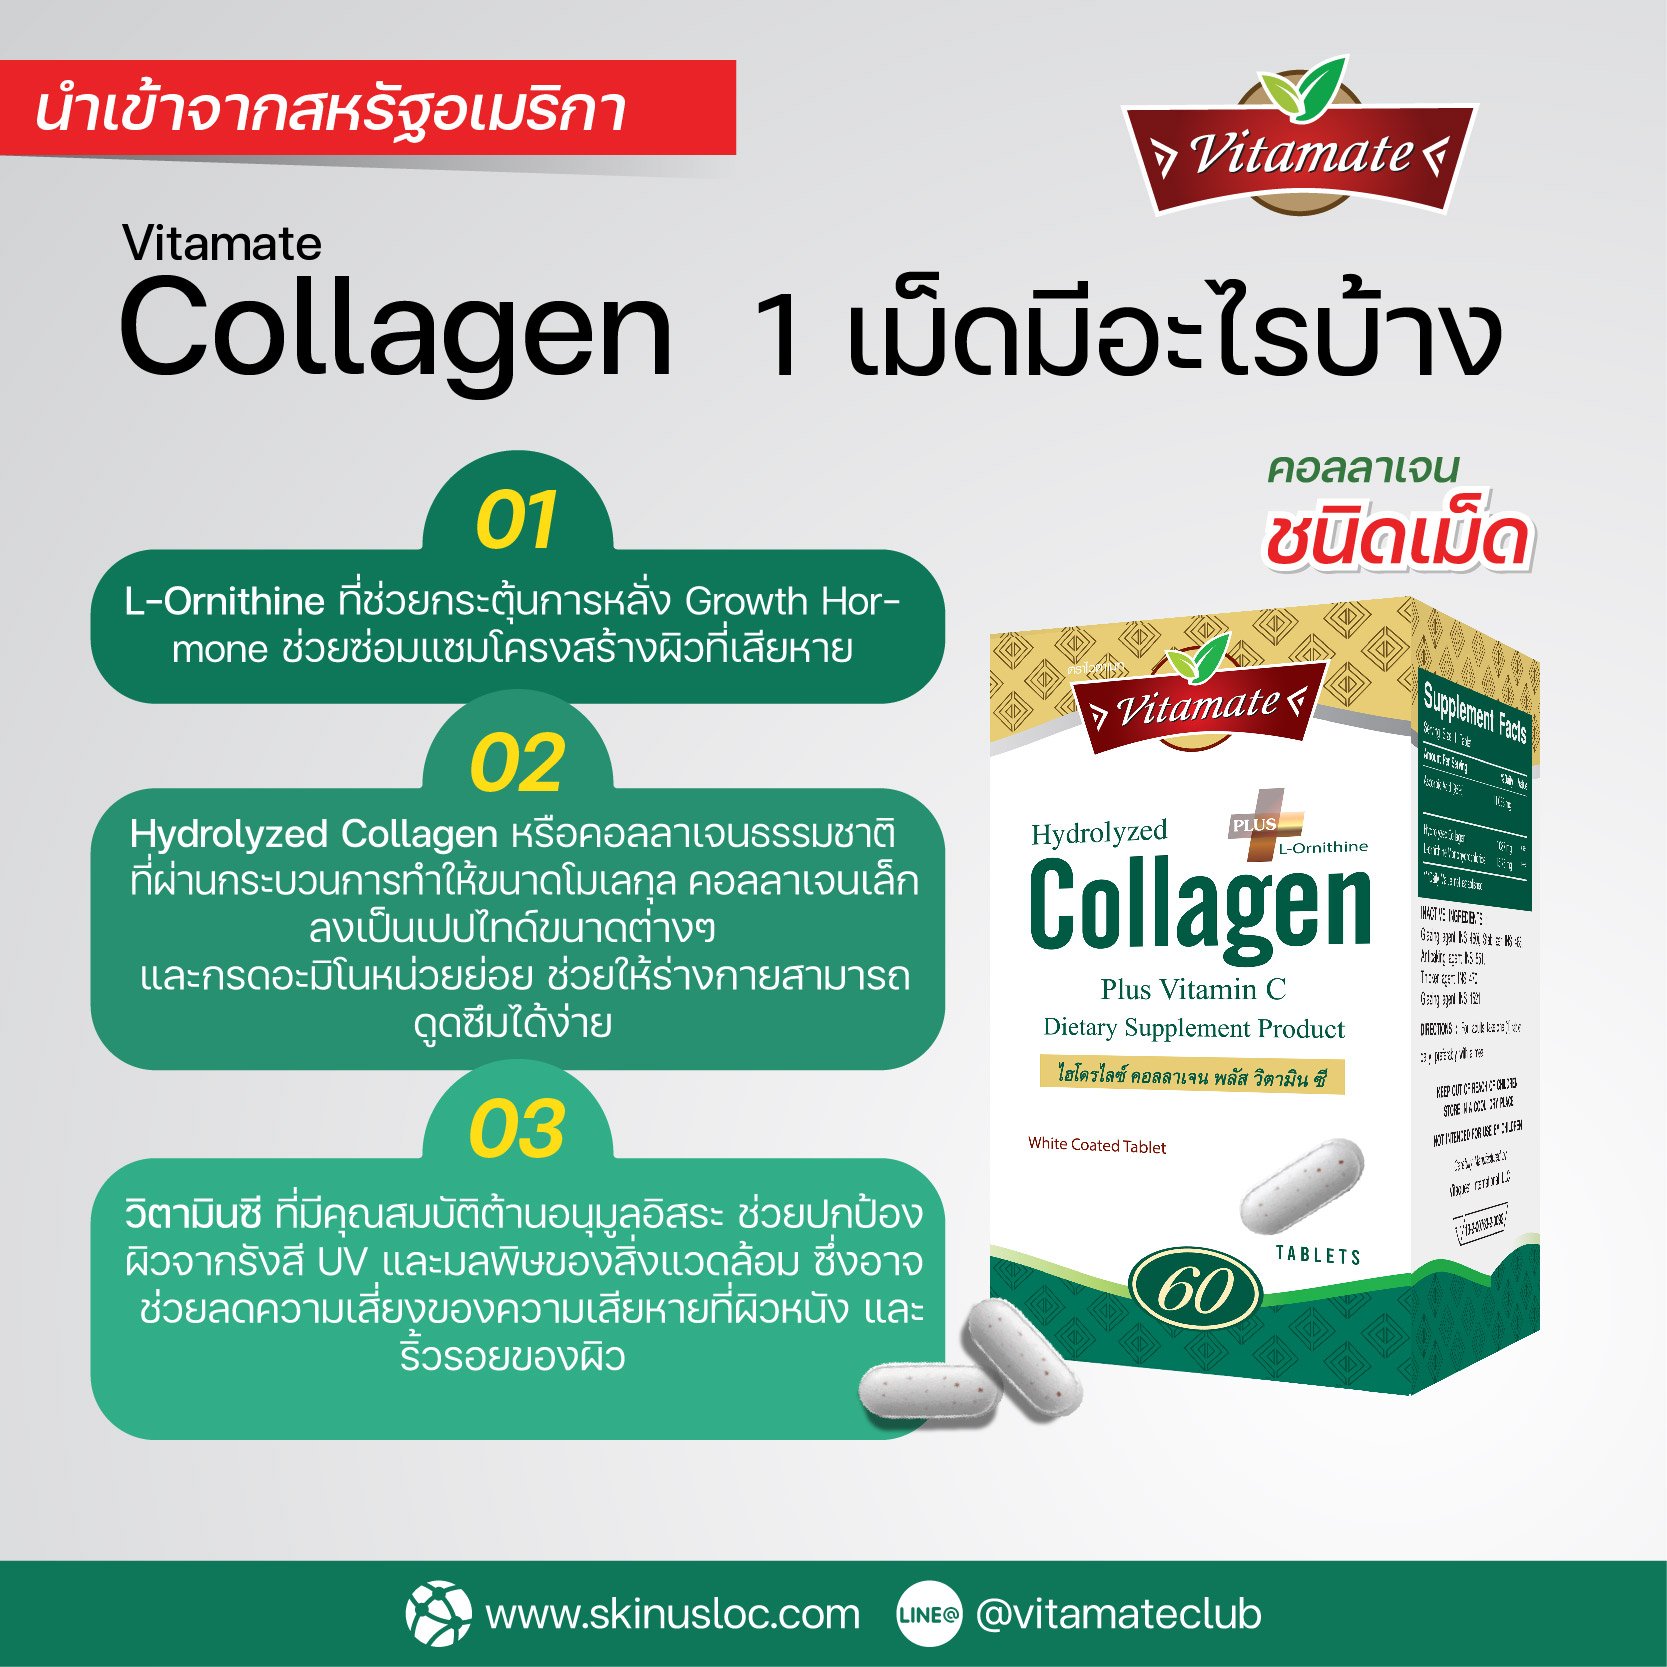 Vitamate Collagen  ใน 1 เม็ด มีส่วนผสมของอะไรบ้างนะ ??